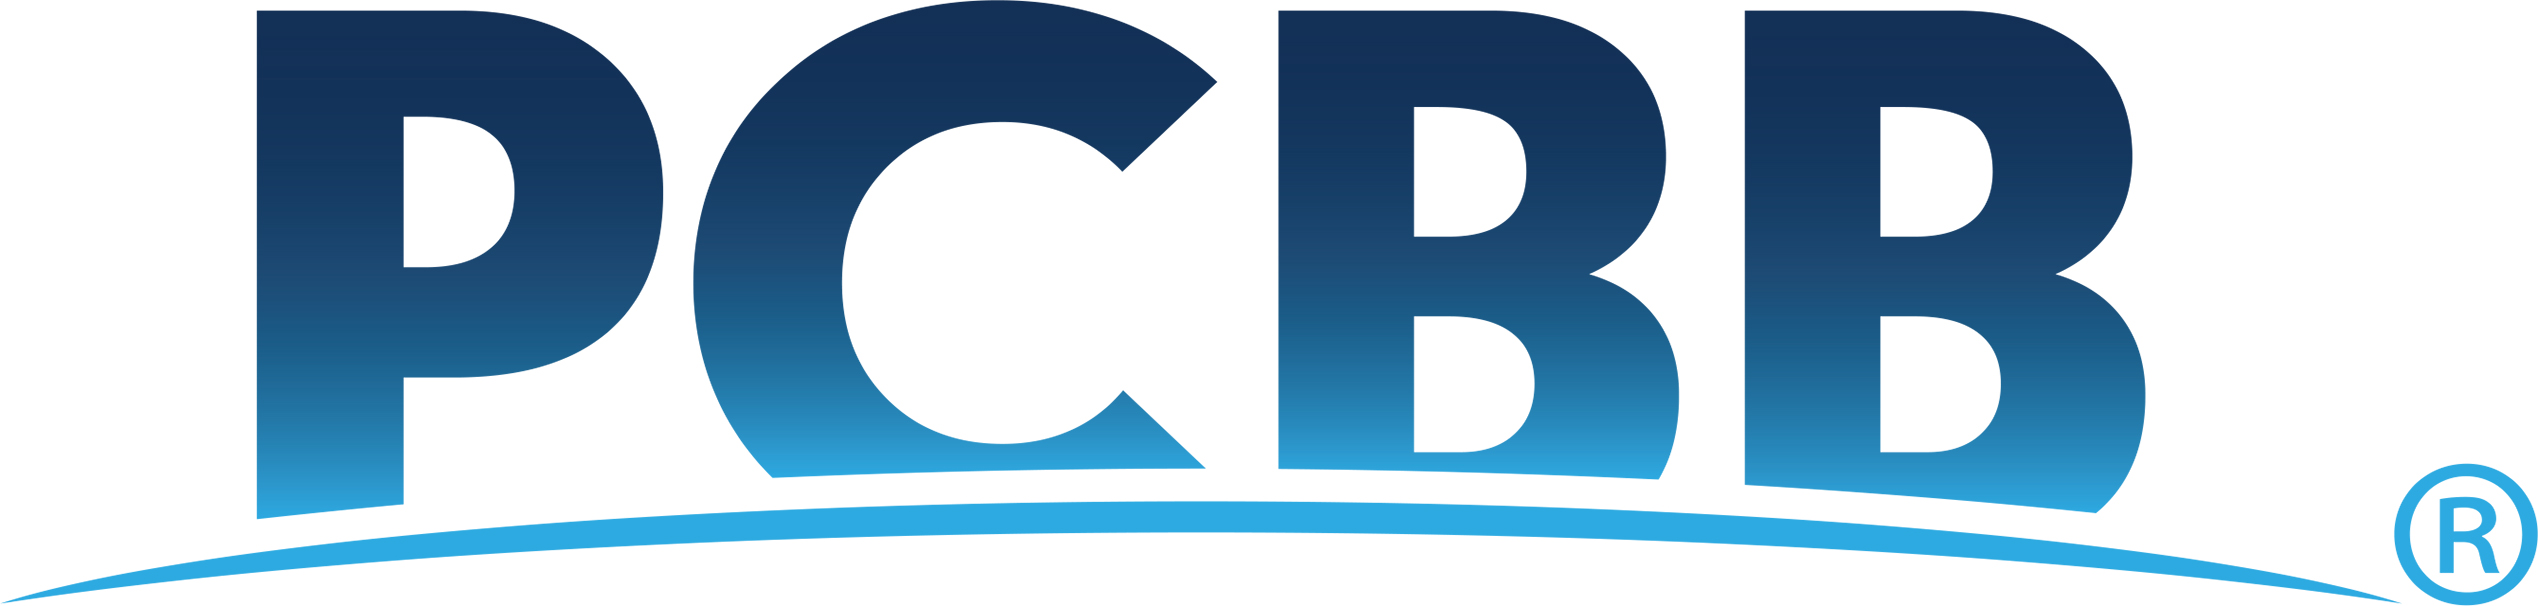 23_pcbb logo